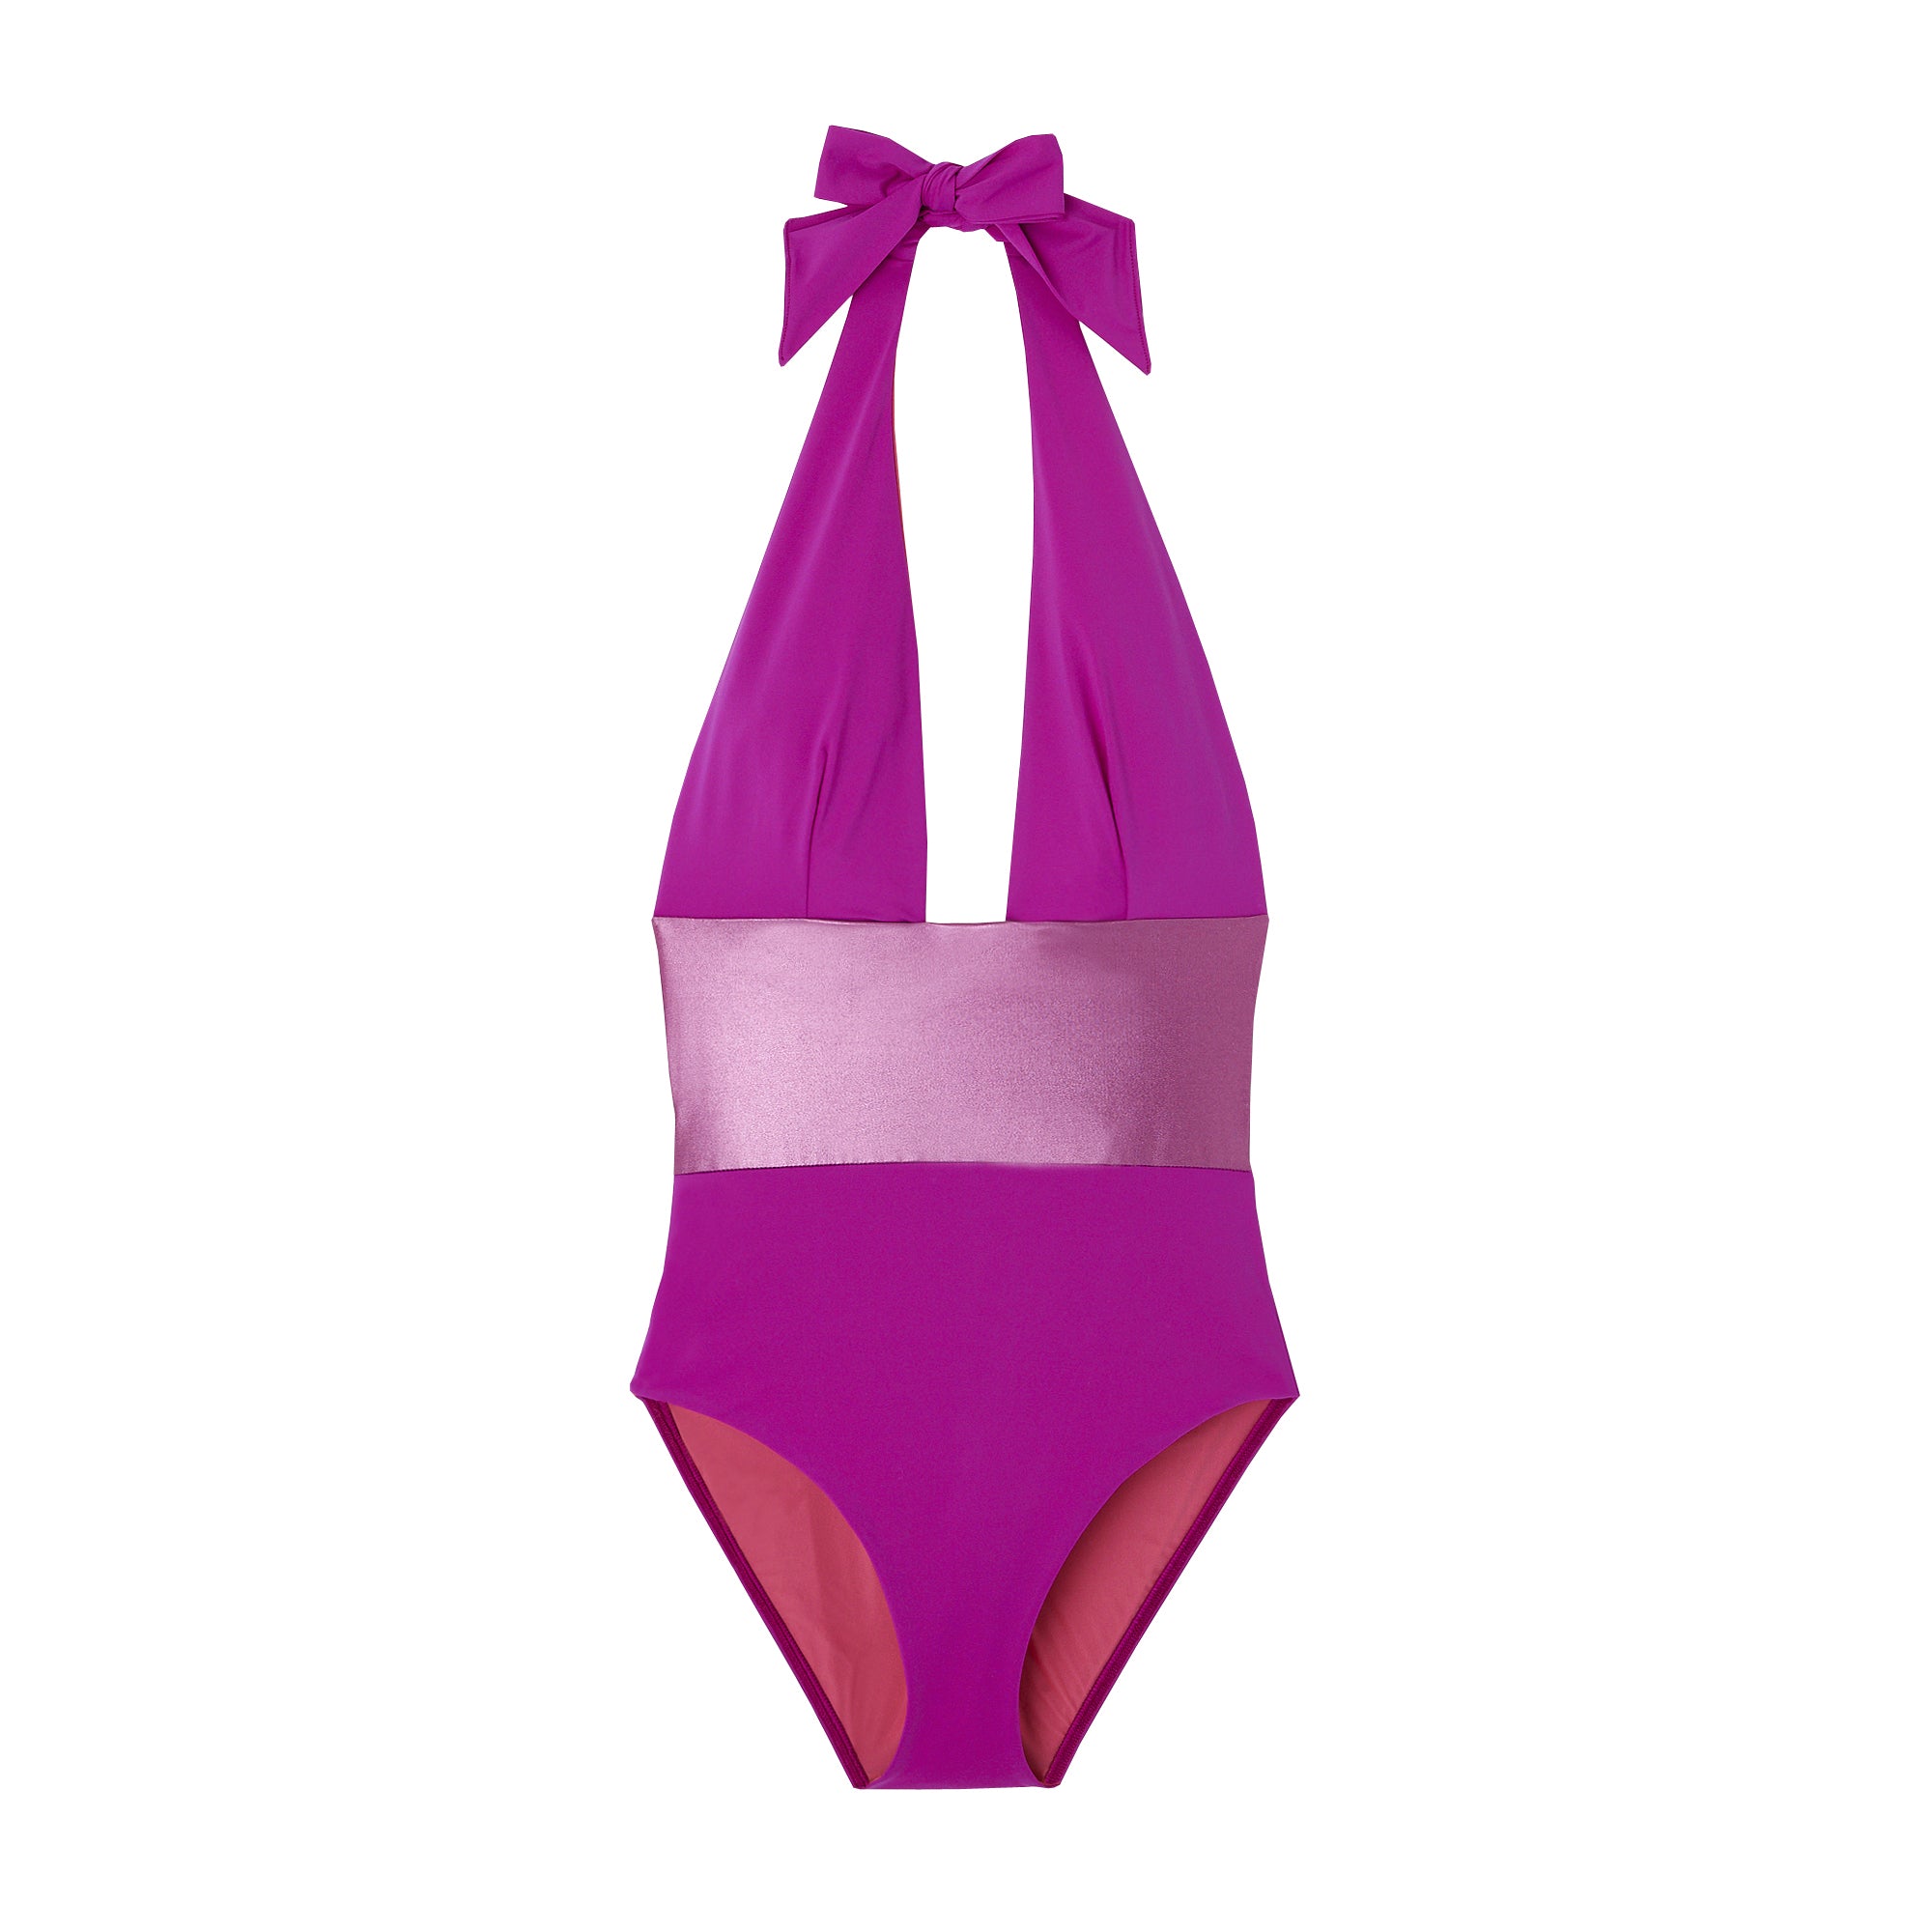 One piece swimsuit for women - Calvi Model